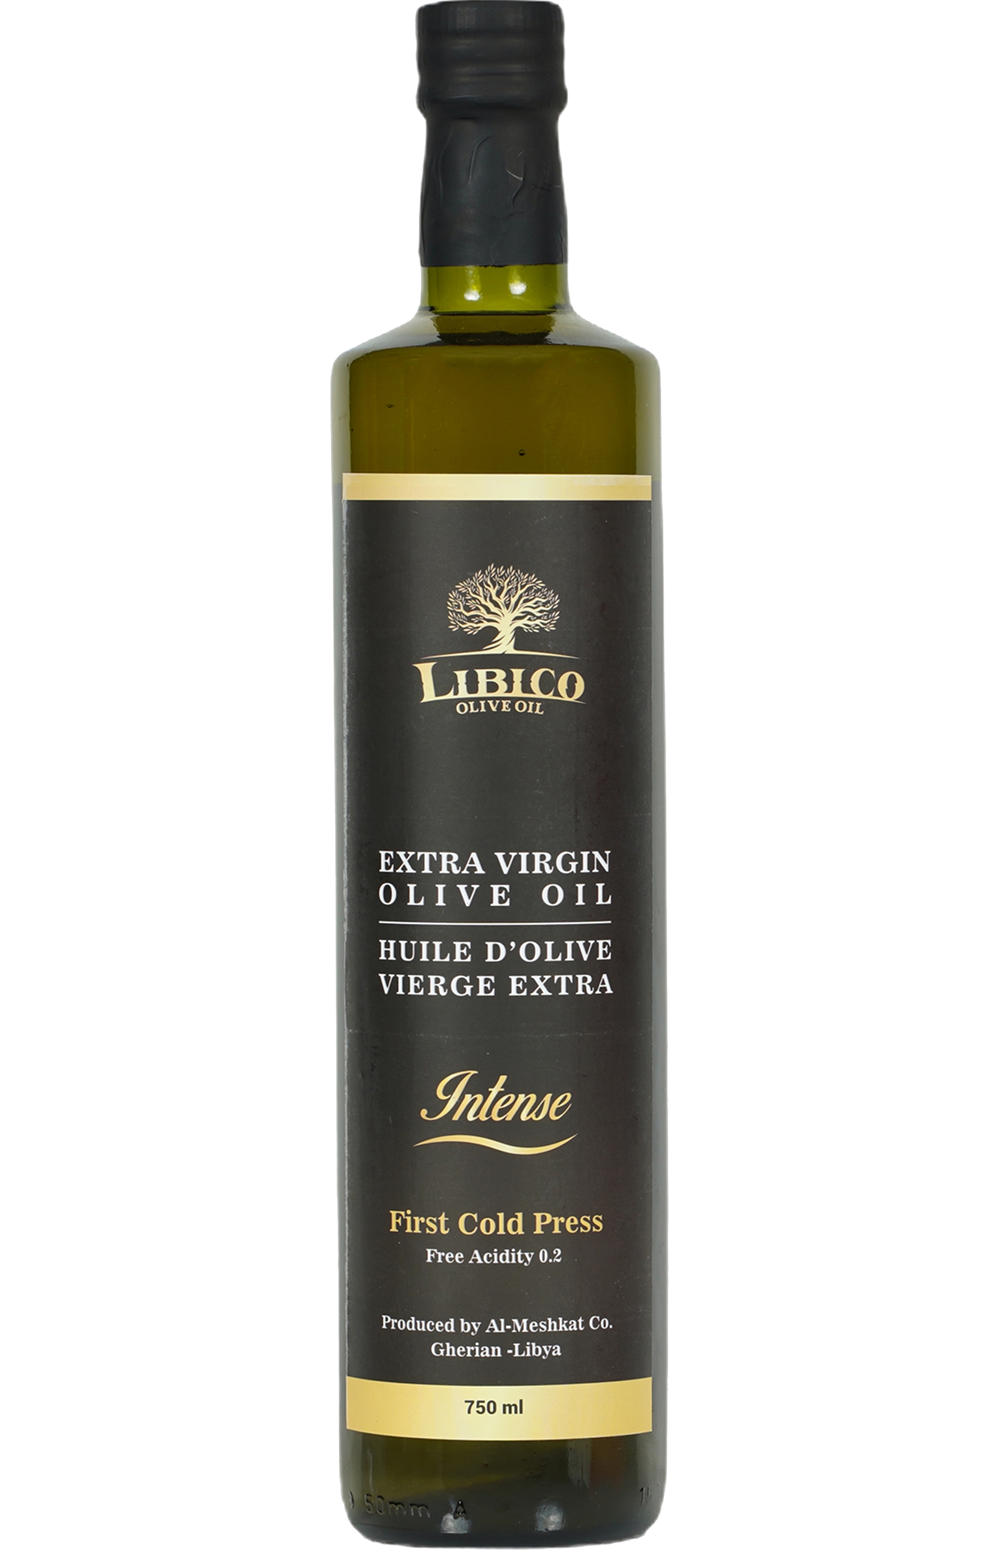 Libico Intense Olive oil